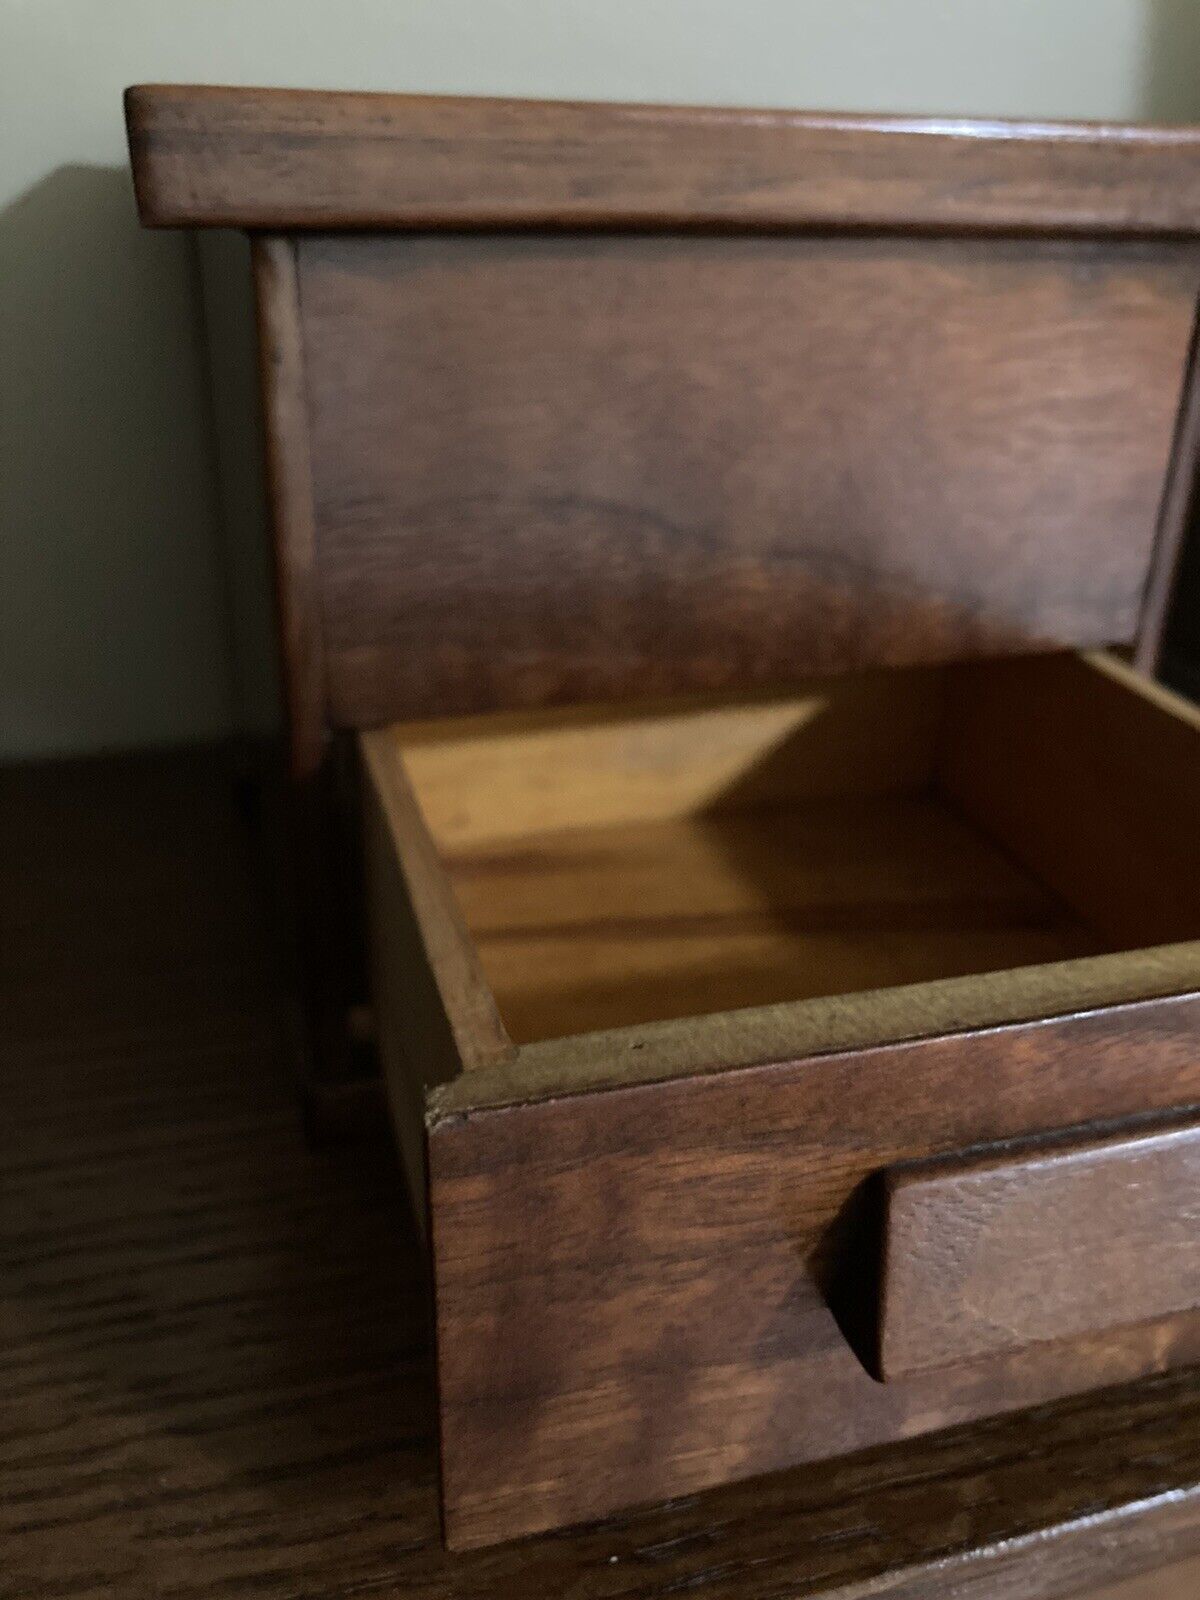 Antique Wooden Pop-Up Tiered Cigarette Stash Box Hand Crafted Secret Drawer